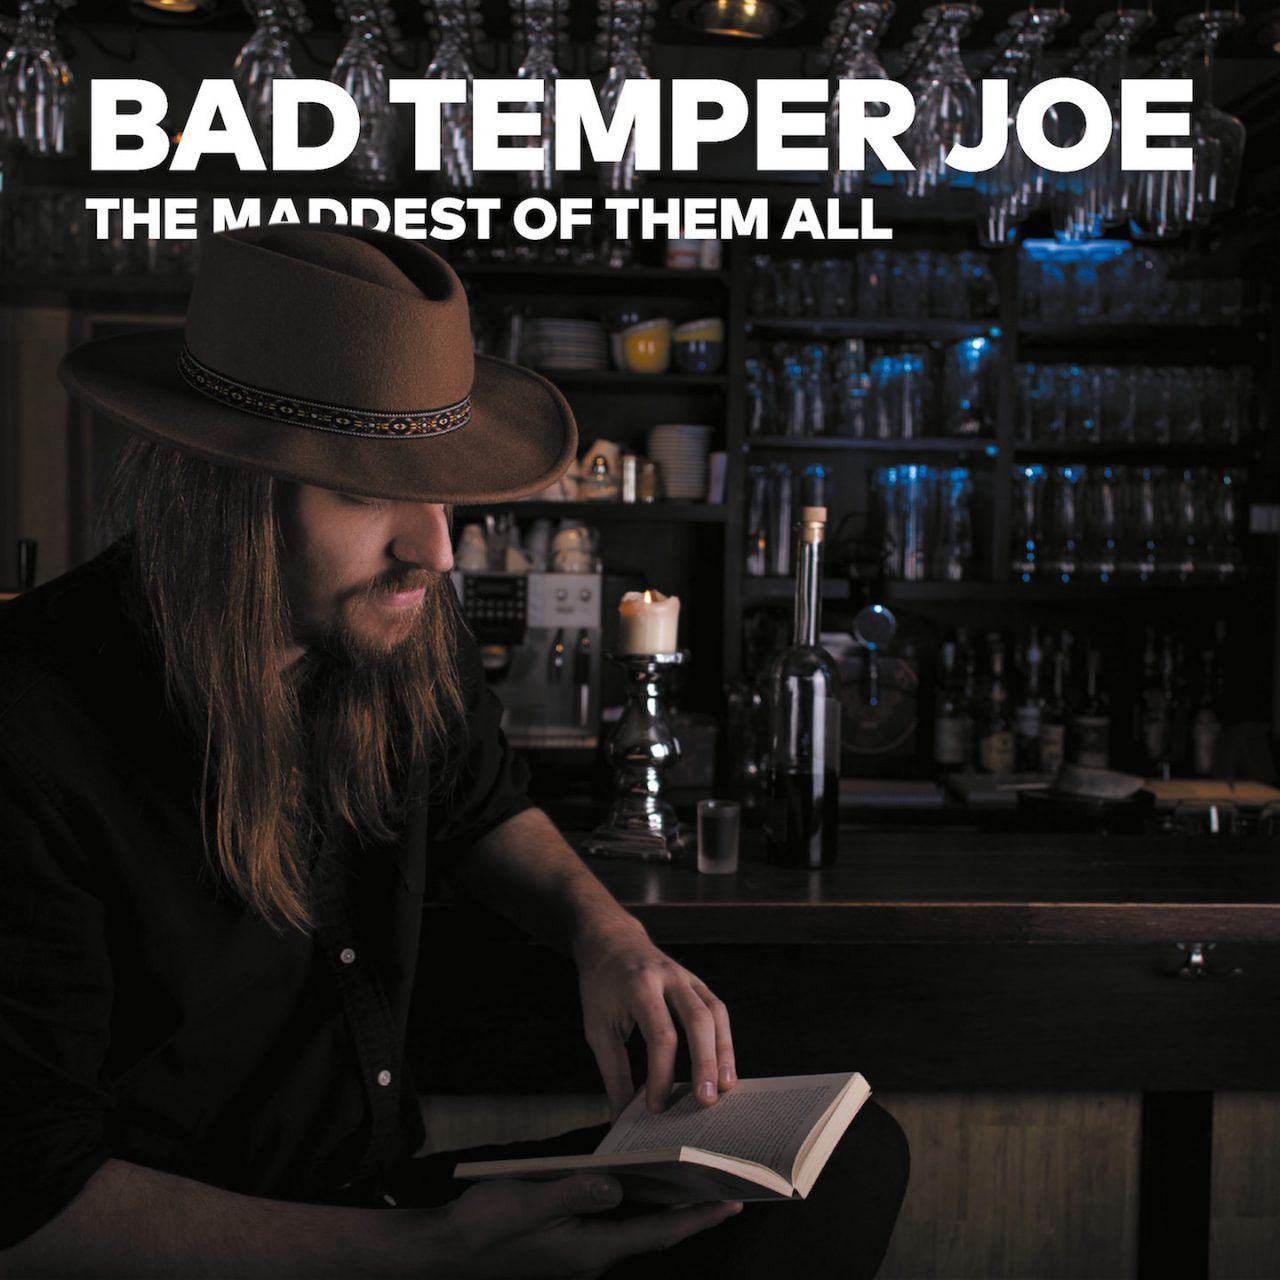 Bad Temper Joe – The Maddest of Them All